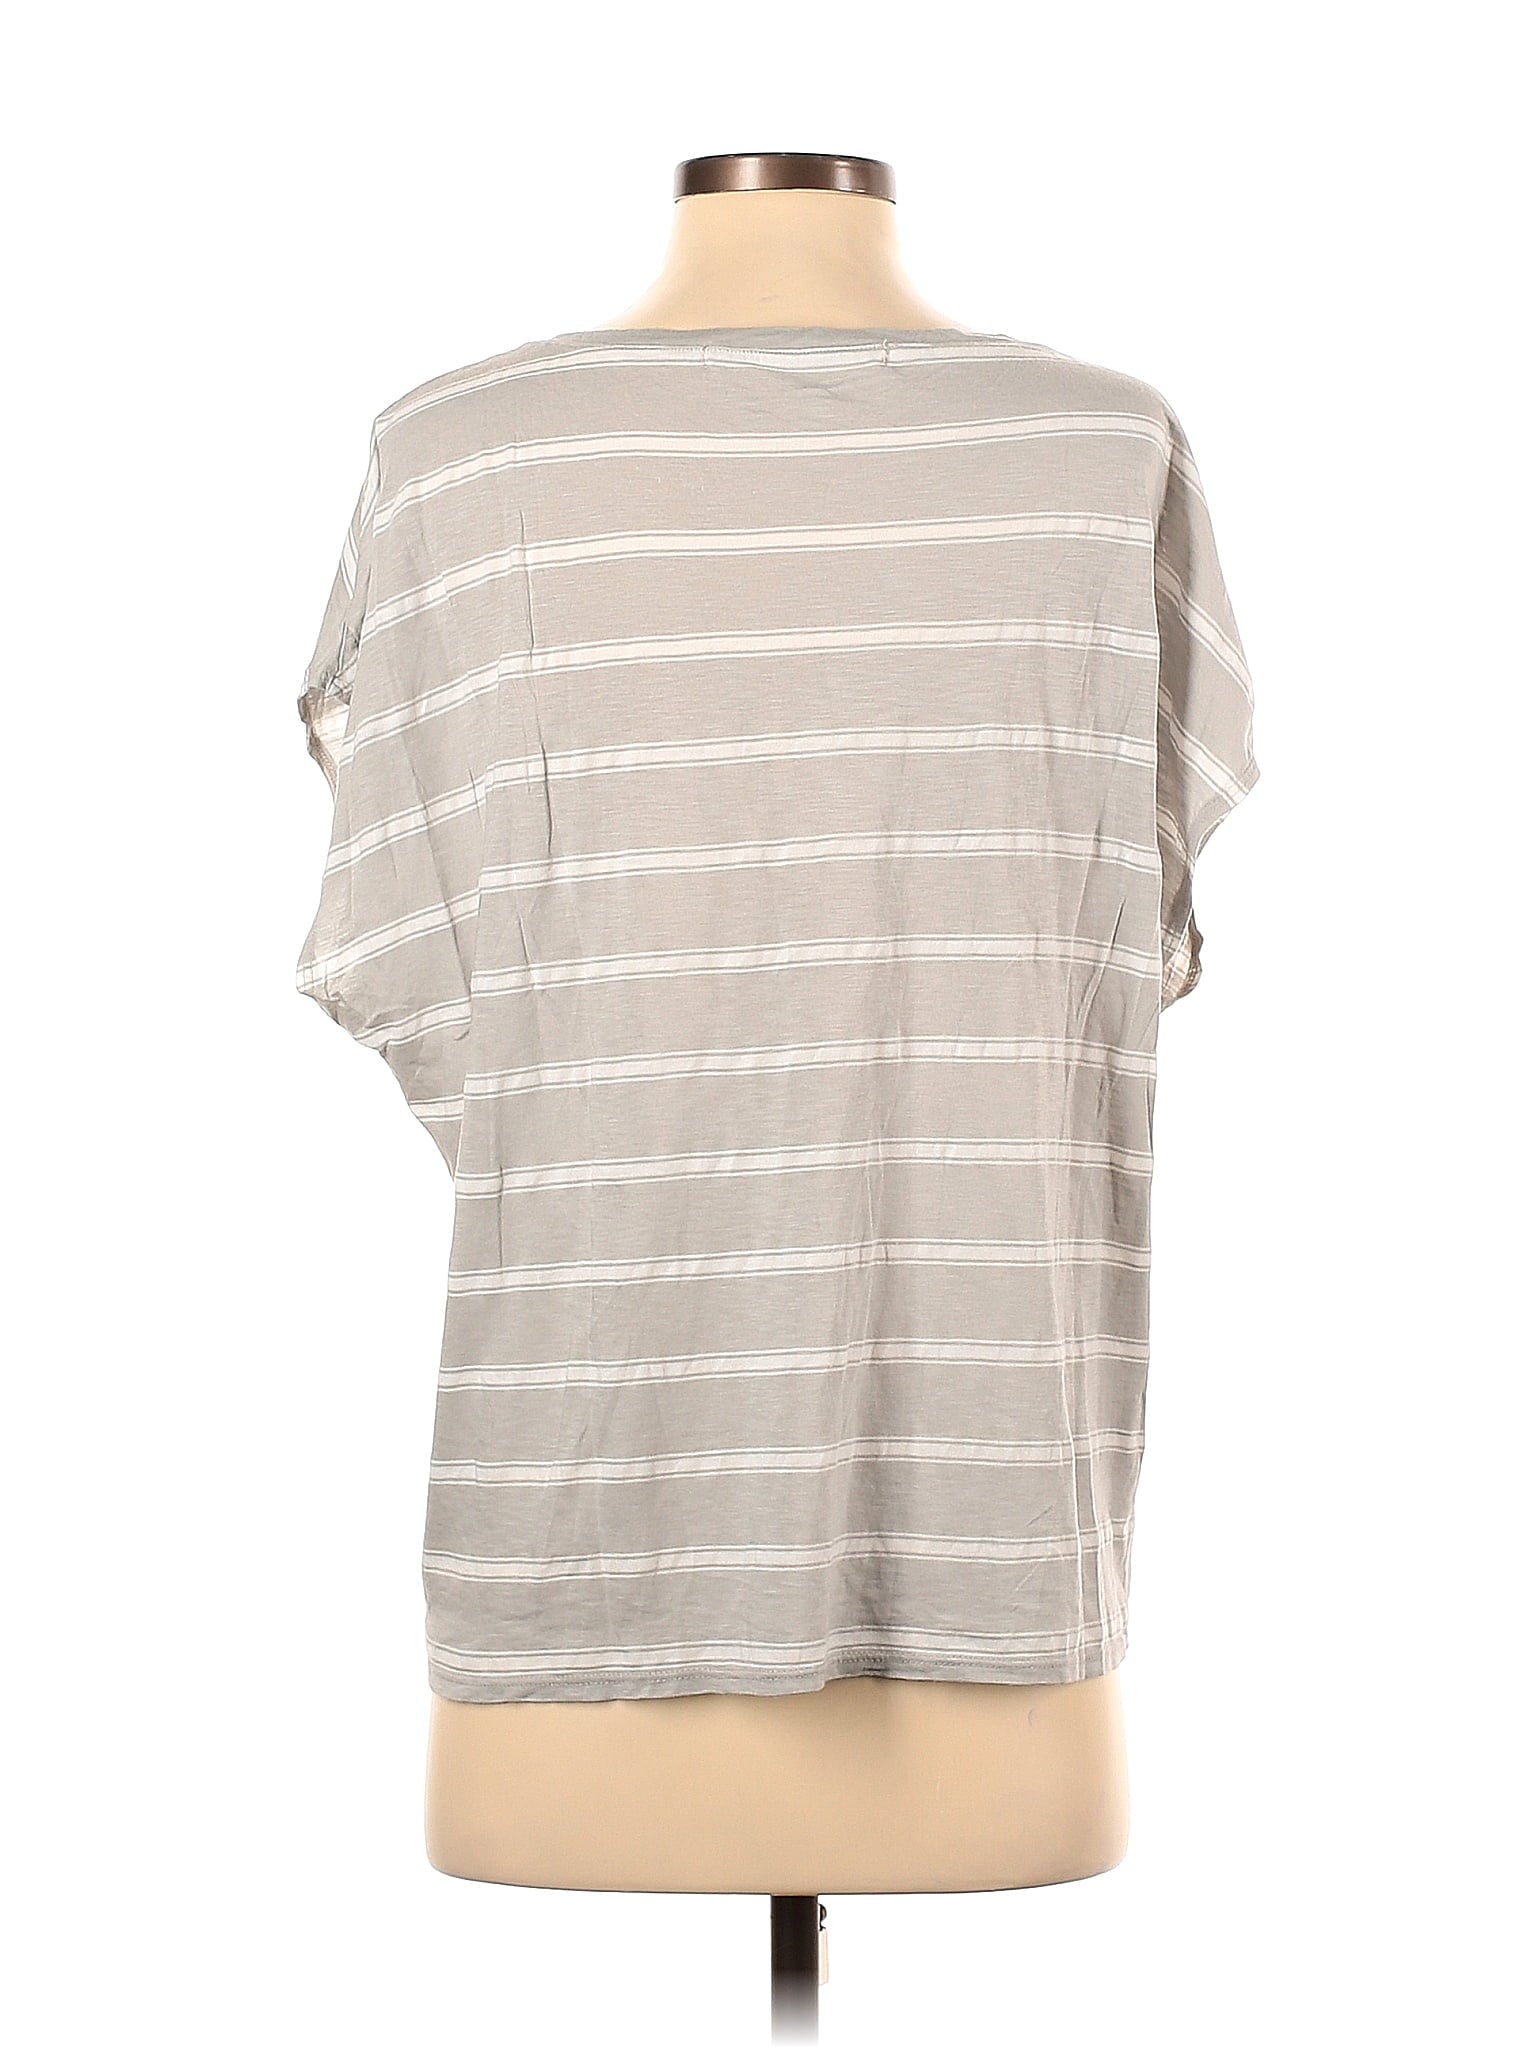 Short Sleeve T Shirt size - Sm (0)